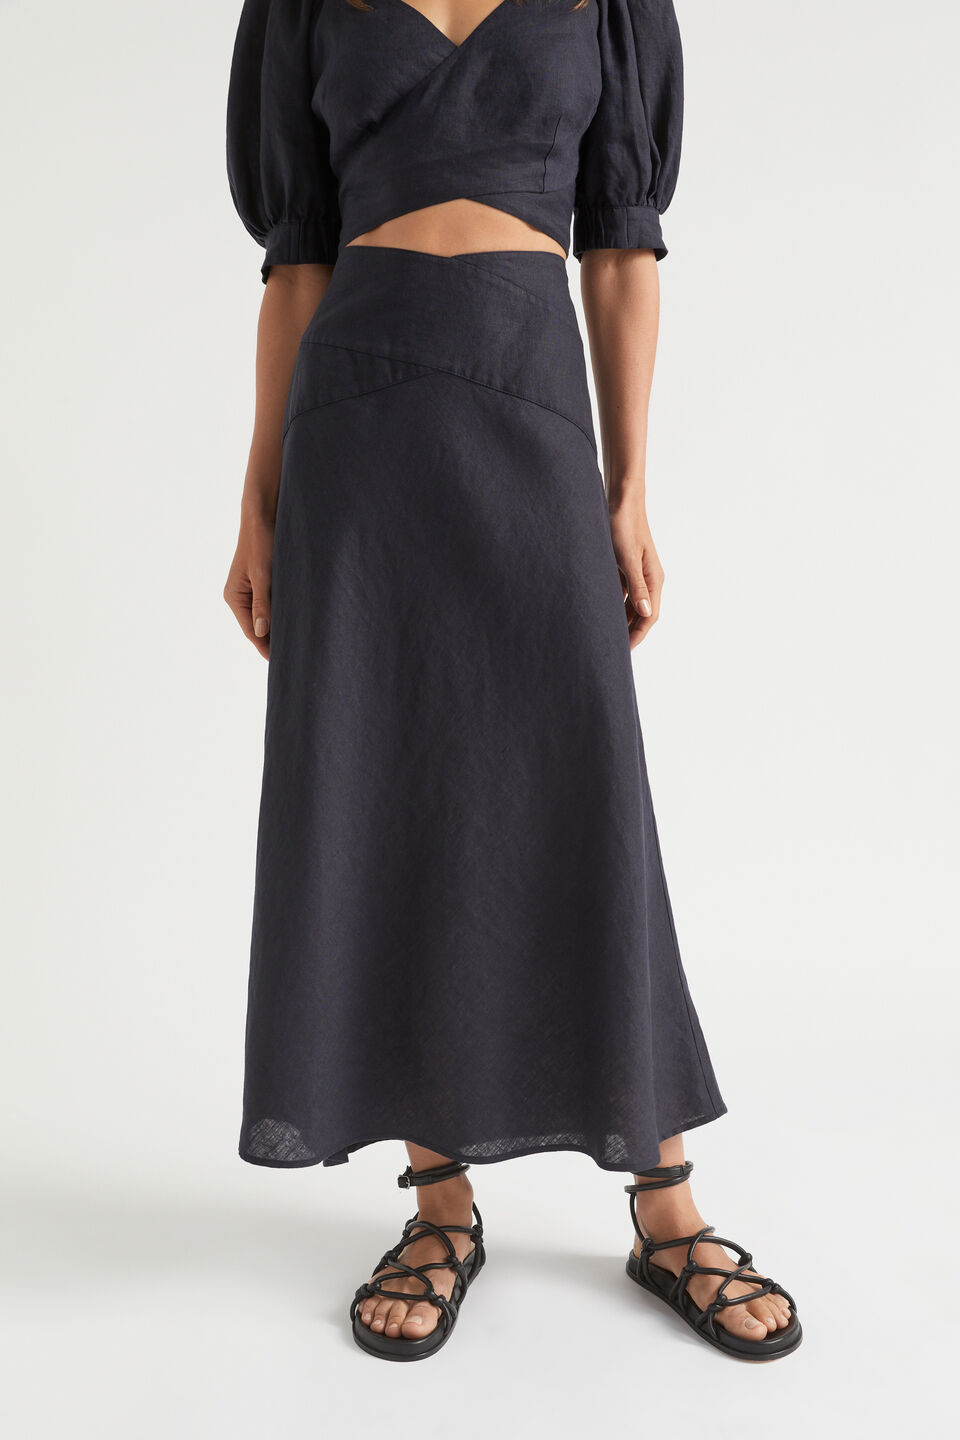 Linen Cross Front Skirt | Seed Heritage